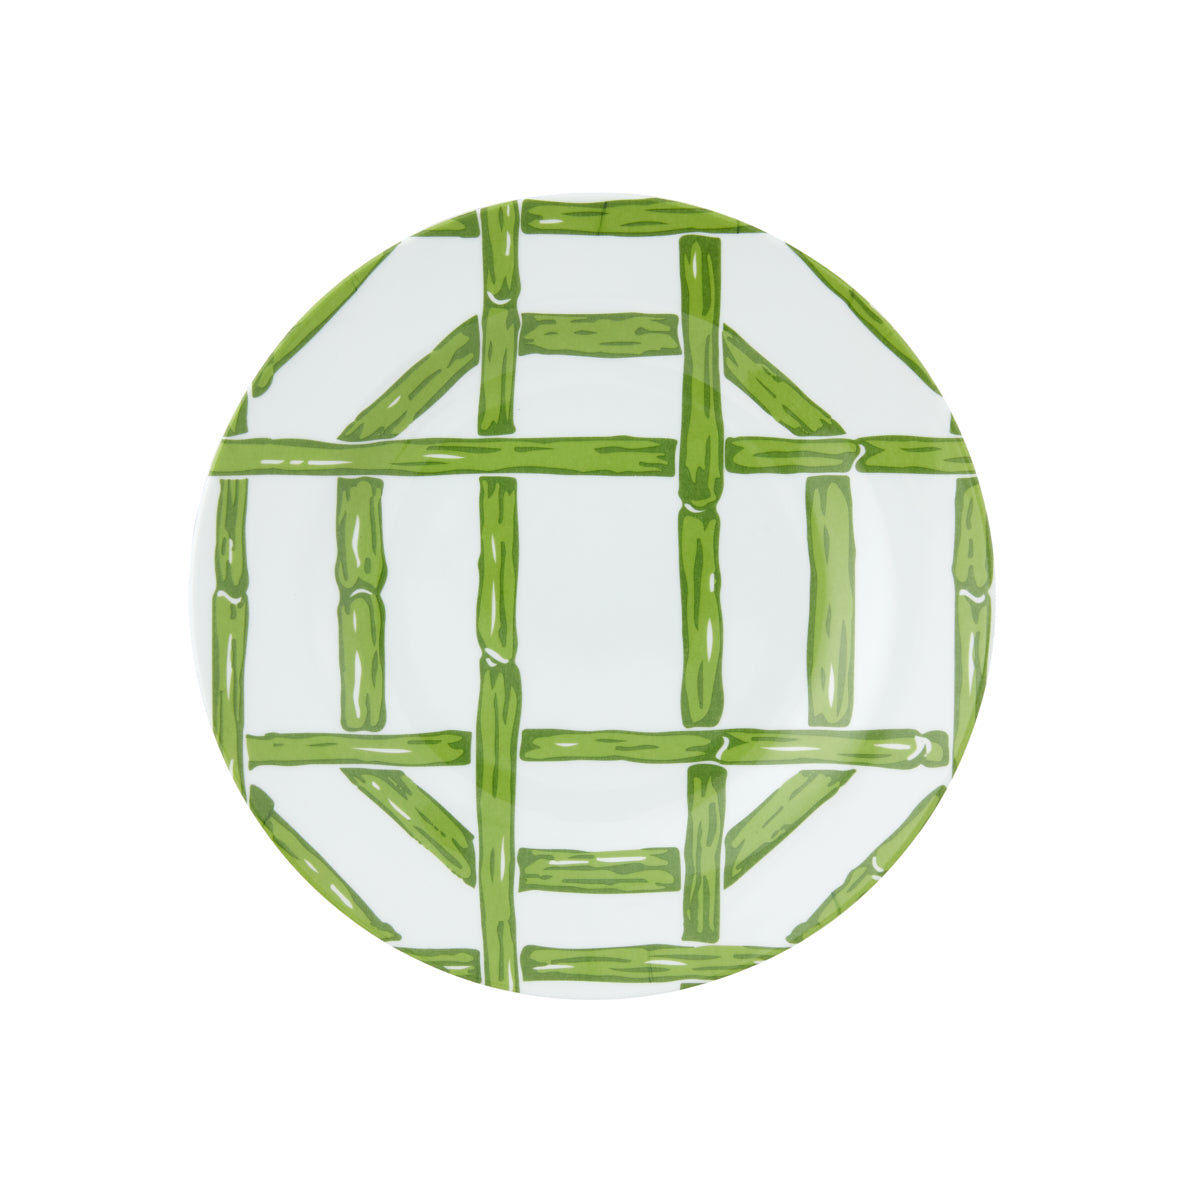 Appetizer Plate - Green bamboo